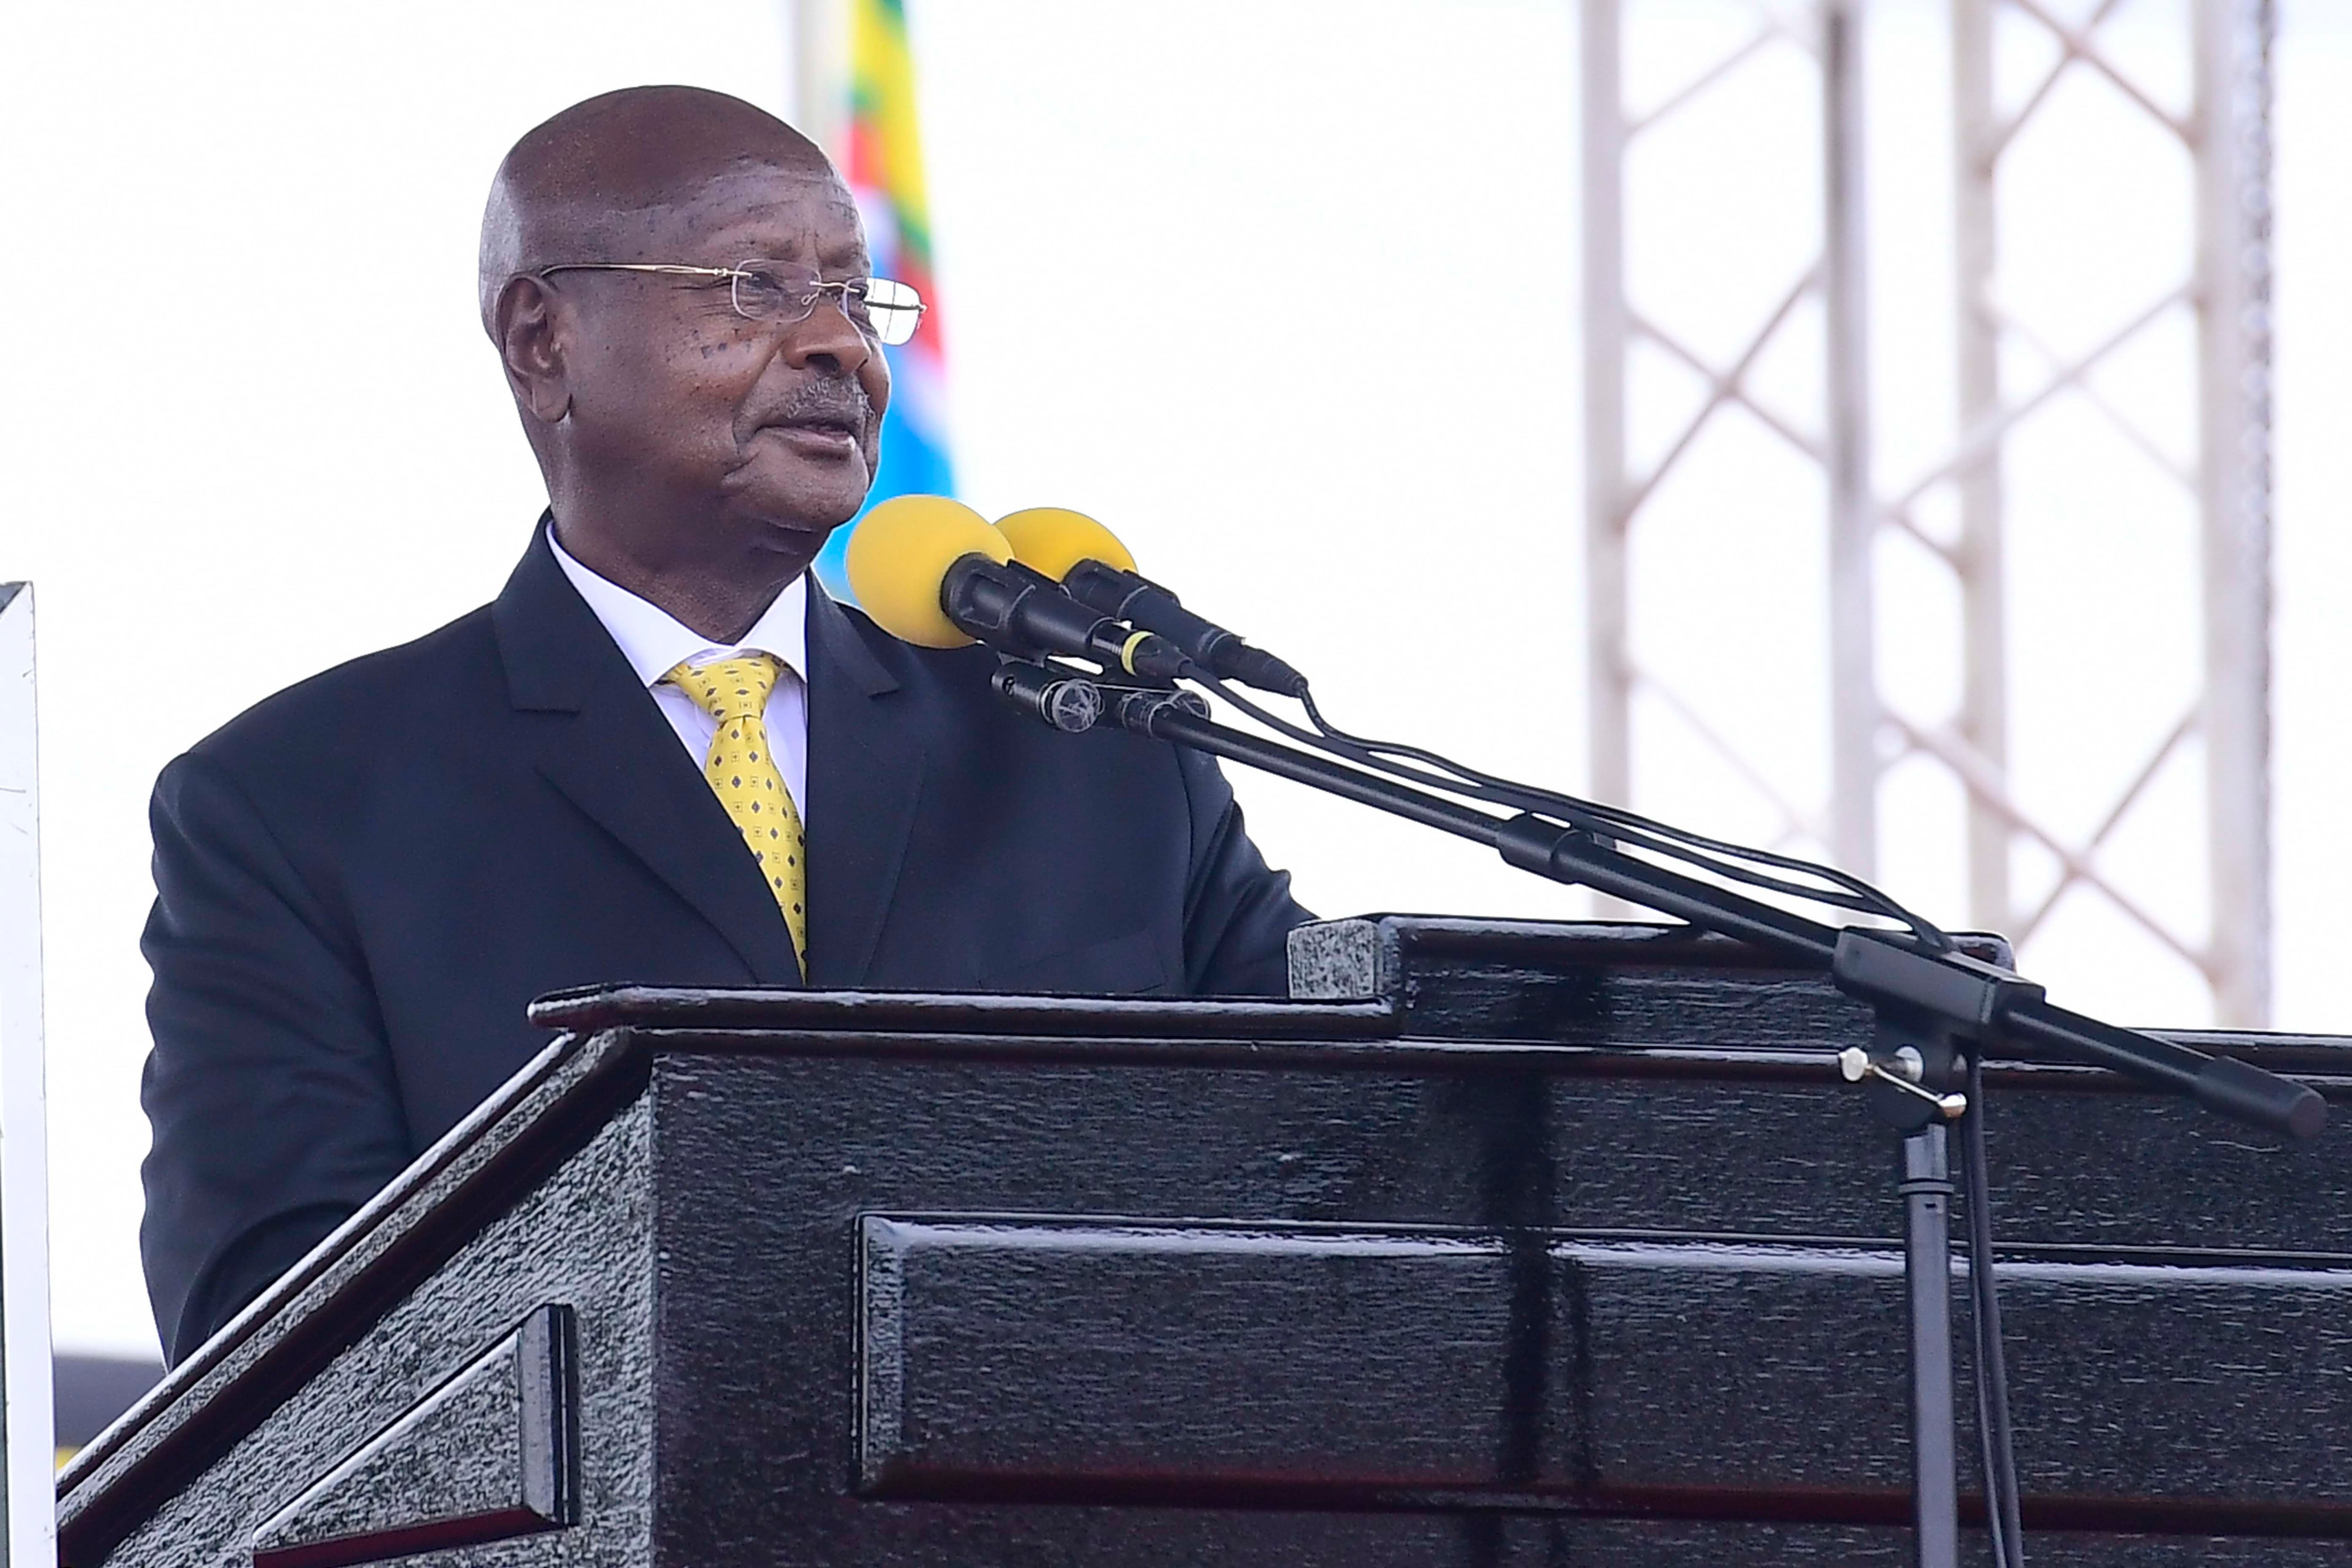 Ugandan President Yoweri Museveni during the swearing-in of his sixth term in May 2021 (Reuters)